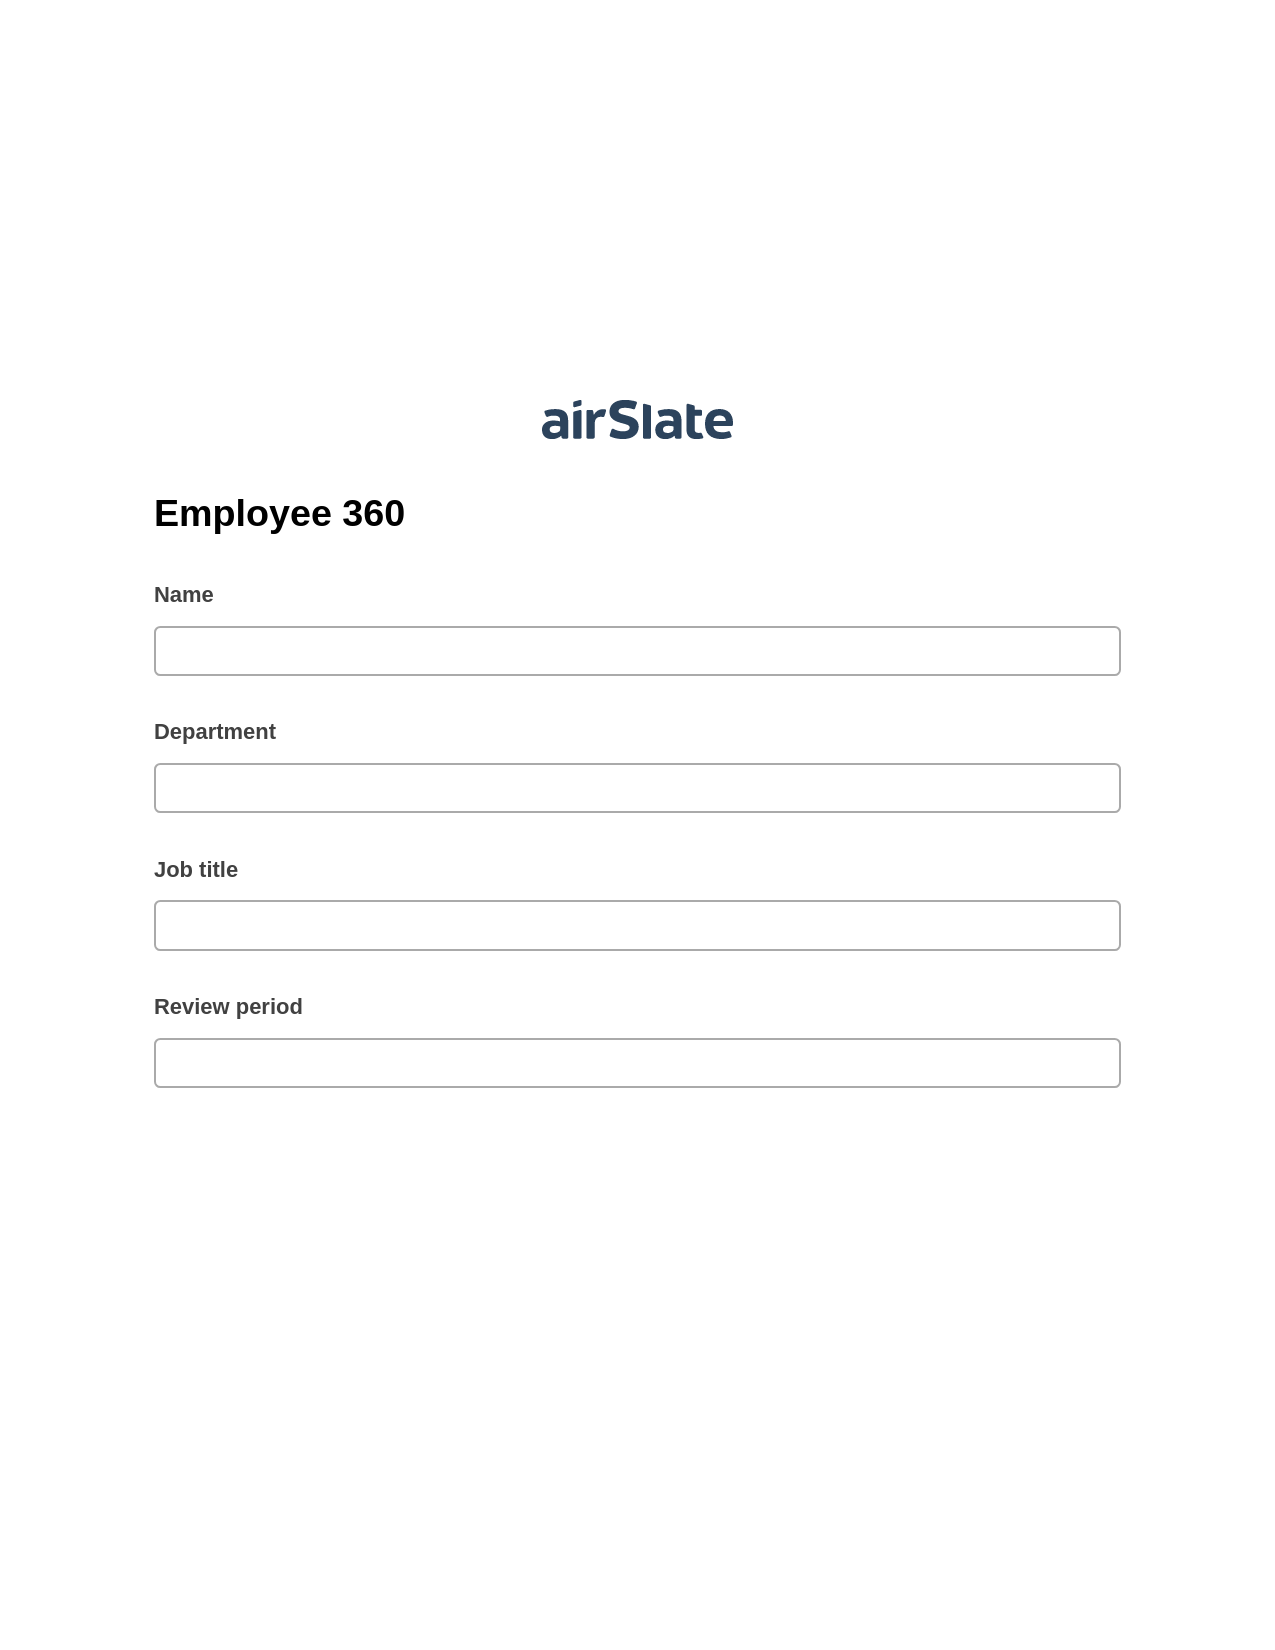 Multirole Employee 360 Pre-fill from CSV File Bot, Invoke Salesforce Process Bot, Slack Notification Postfinish Bot